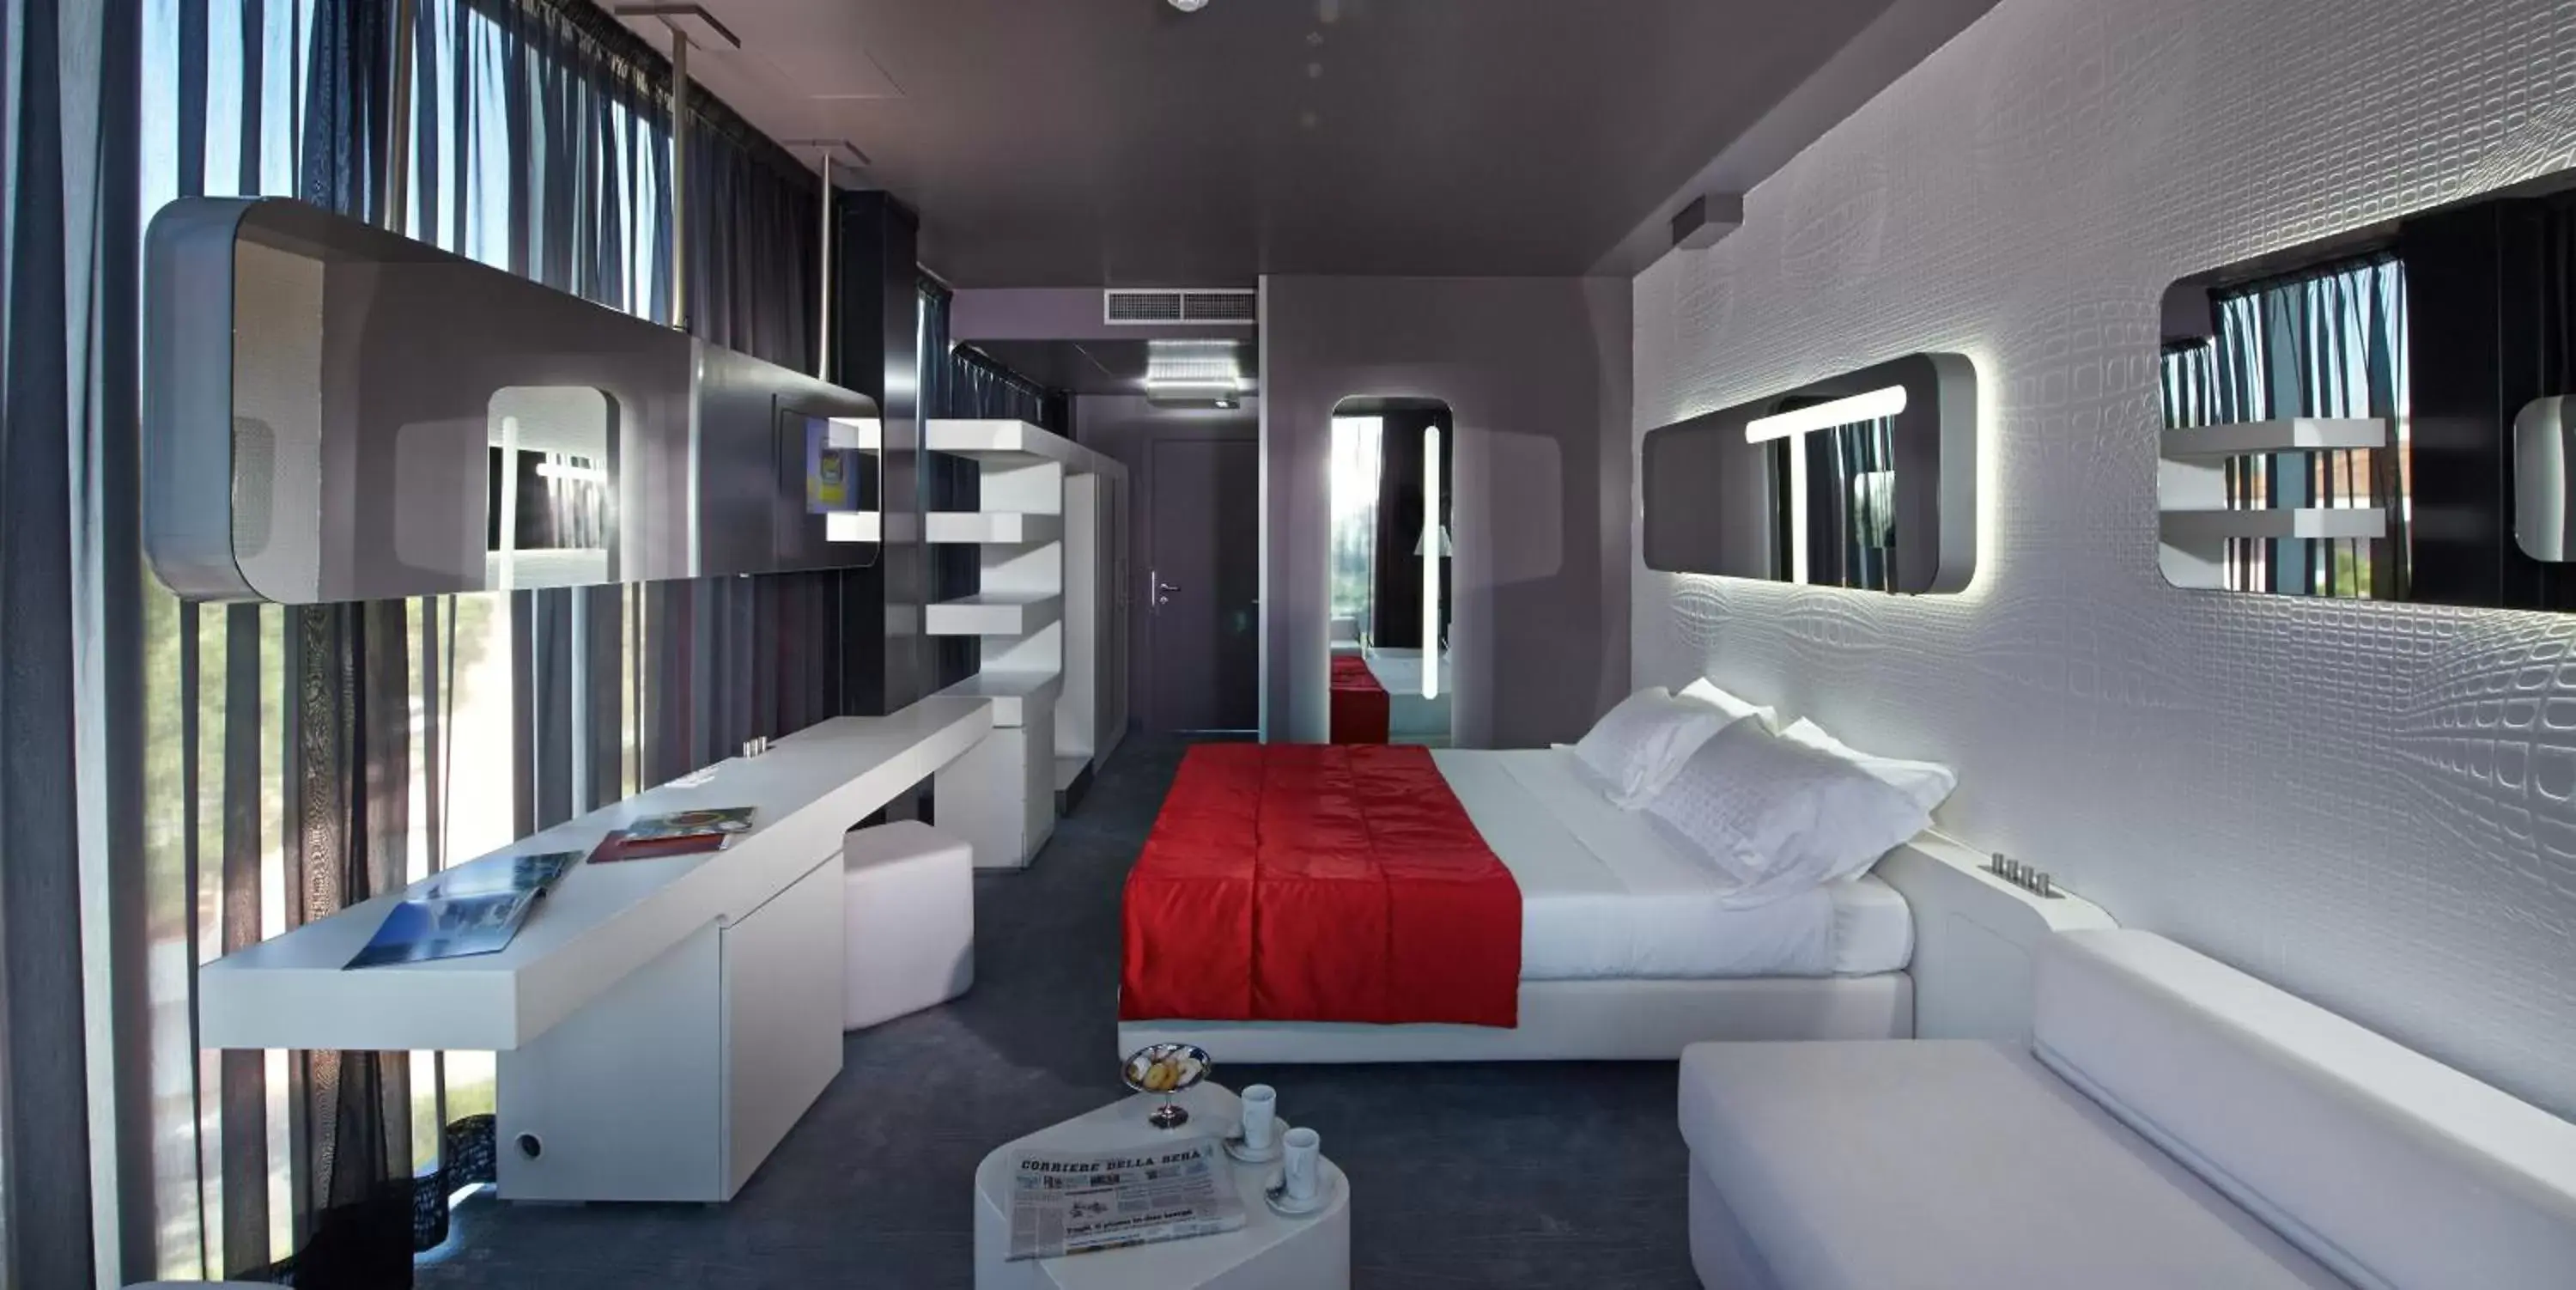 Bed in San Ranieri Hotel